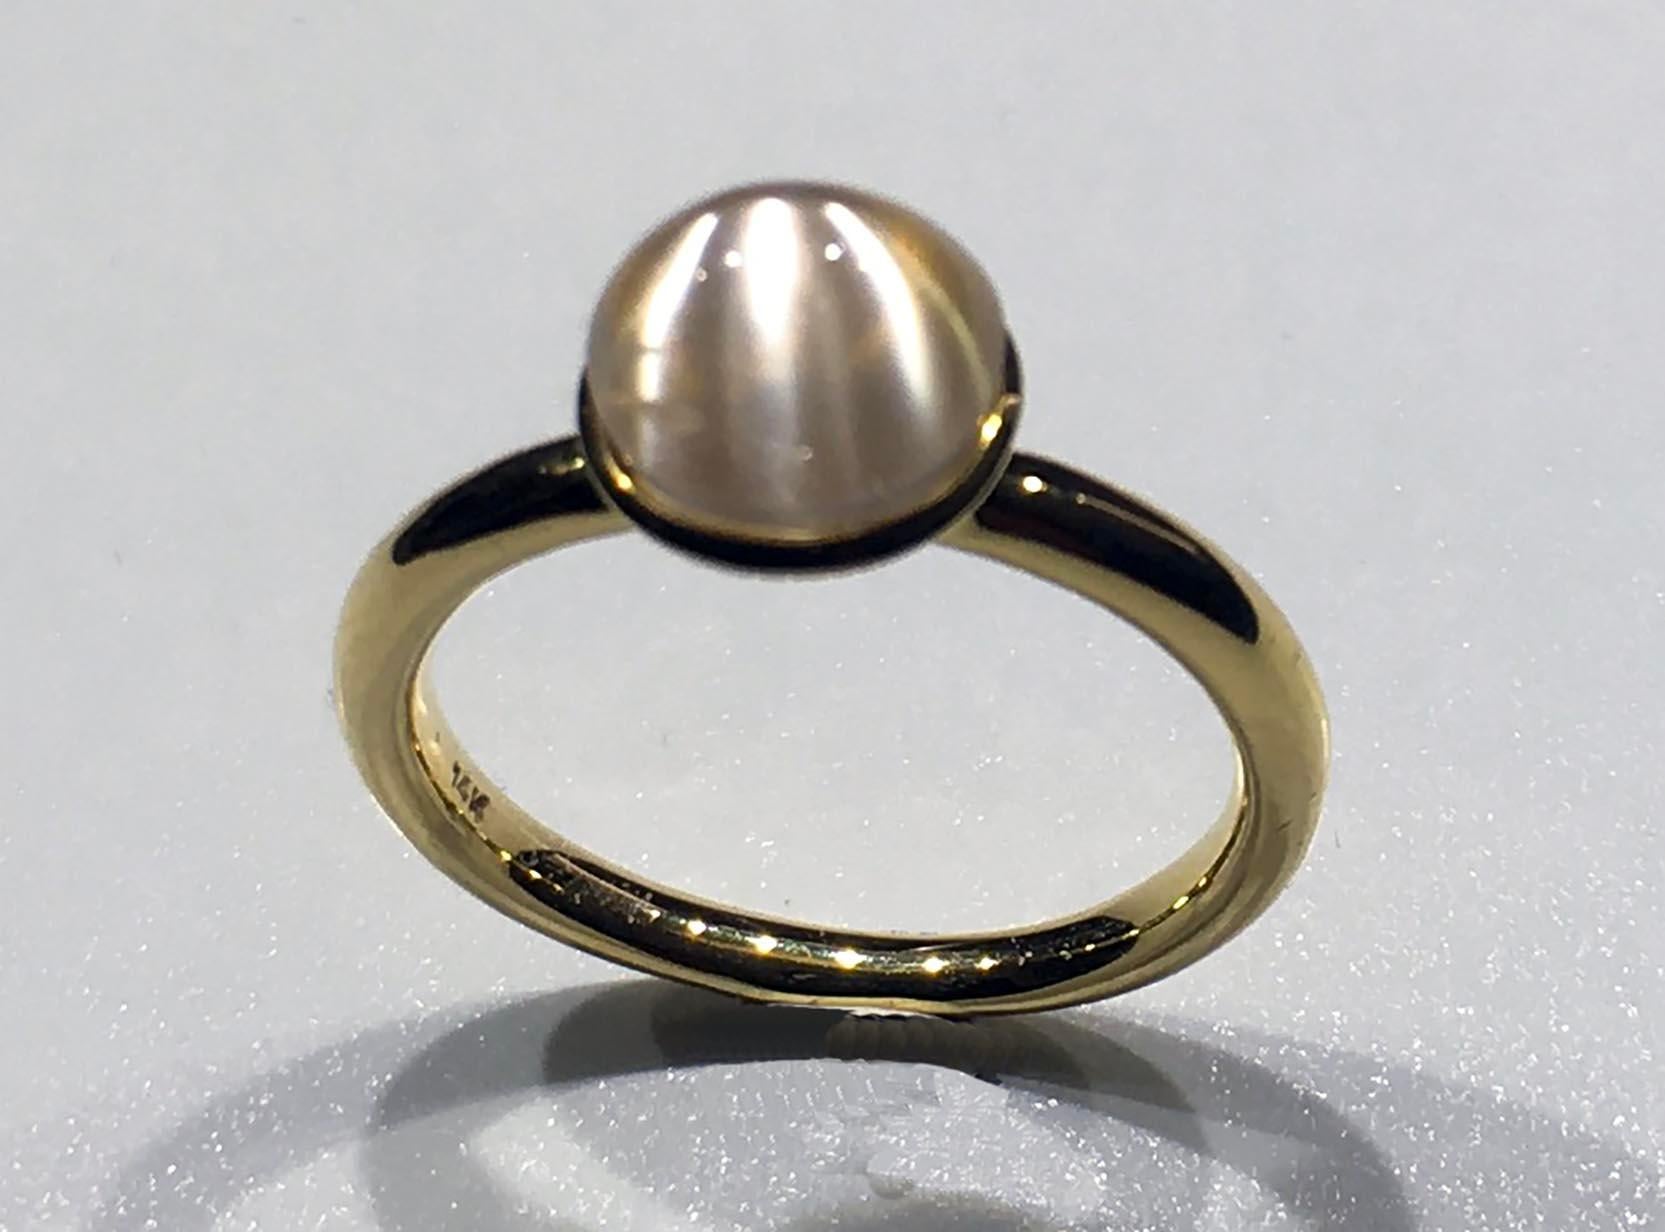 Kary Adam Designed, Burmese Moonstone Ring set in 14kt Gold. This Lovely Burmese Moonstone Ring is in 14kt Gold and sized at 6.5 US. The Moonstone is a large 7MM Cabochon of 2.7 Carats. 

The moonstone effect is called Adularescence. Adularescence